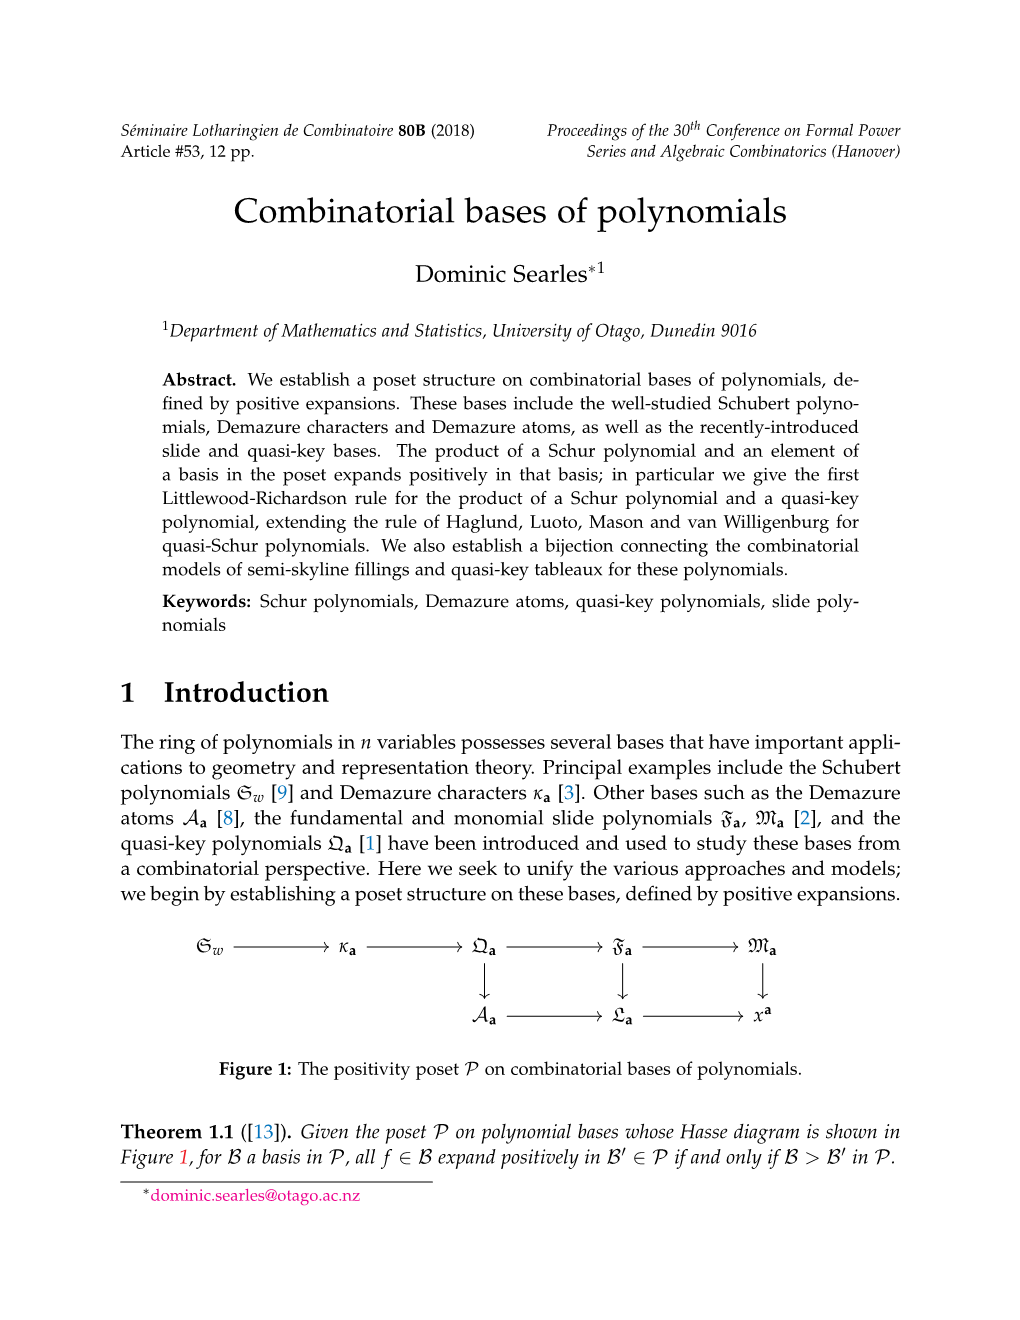 Combinatorial Bases of Polynomials